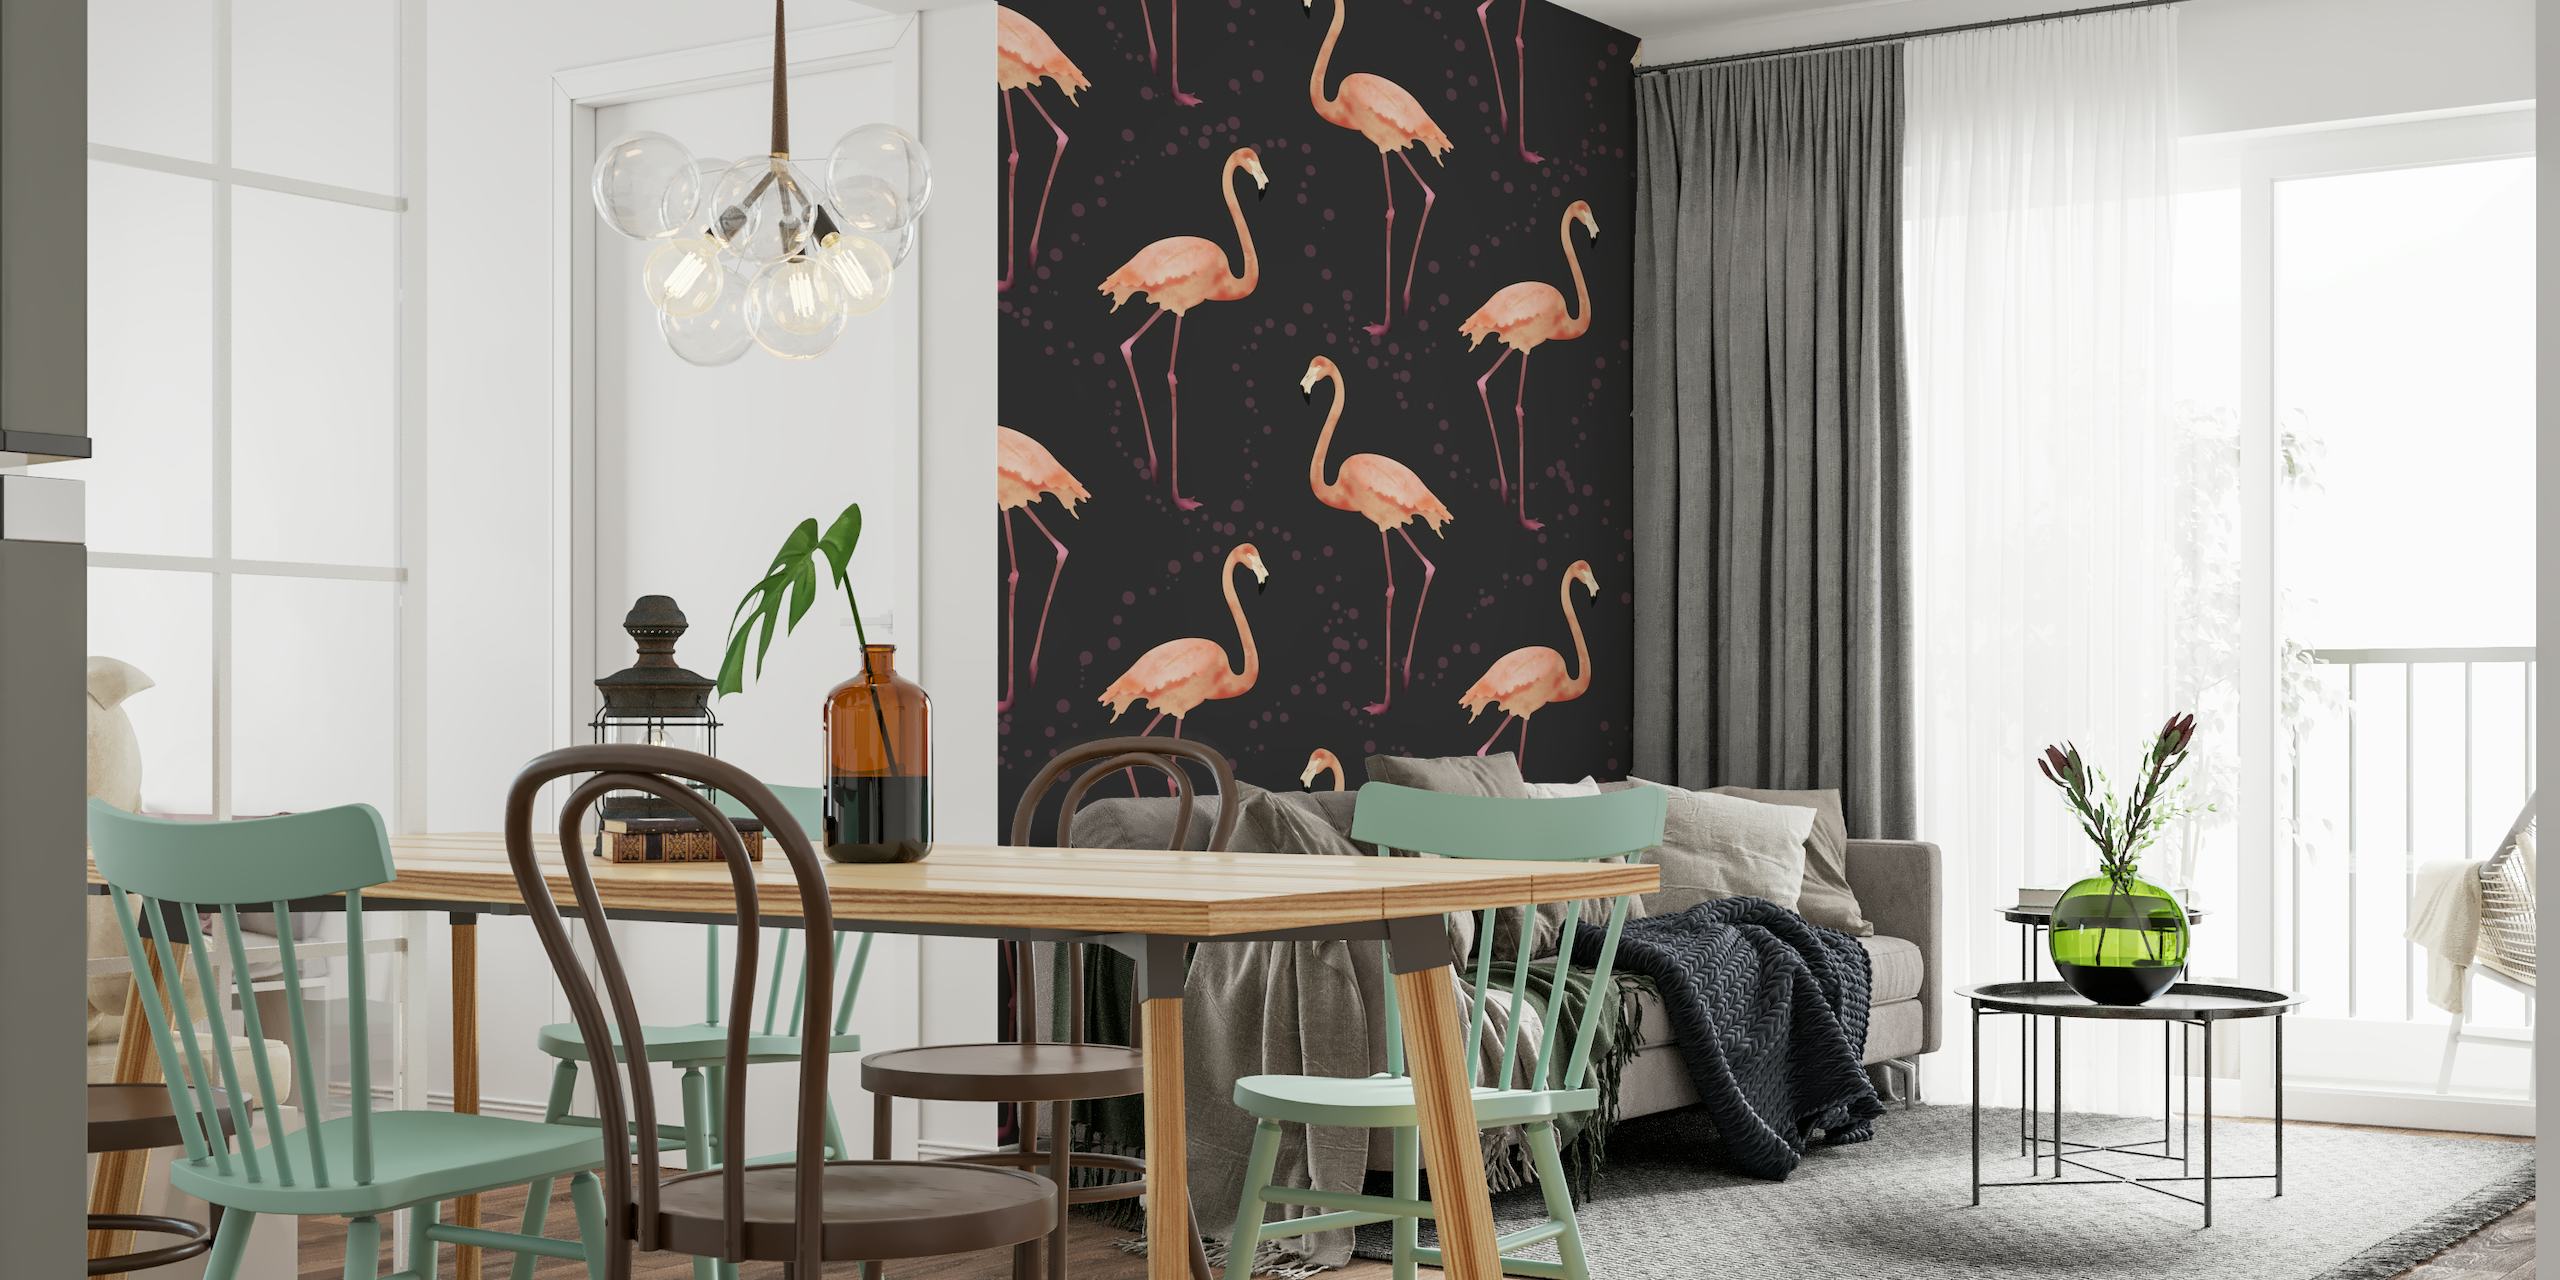 The Flamingo Dance fuchsia papel de parede